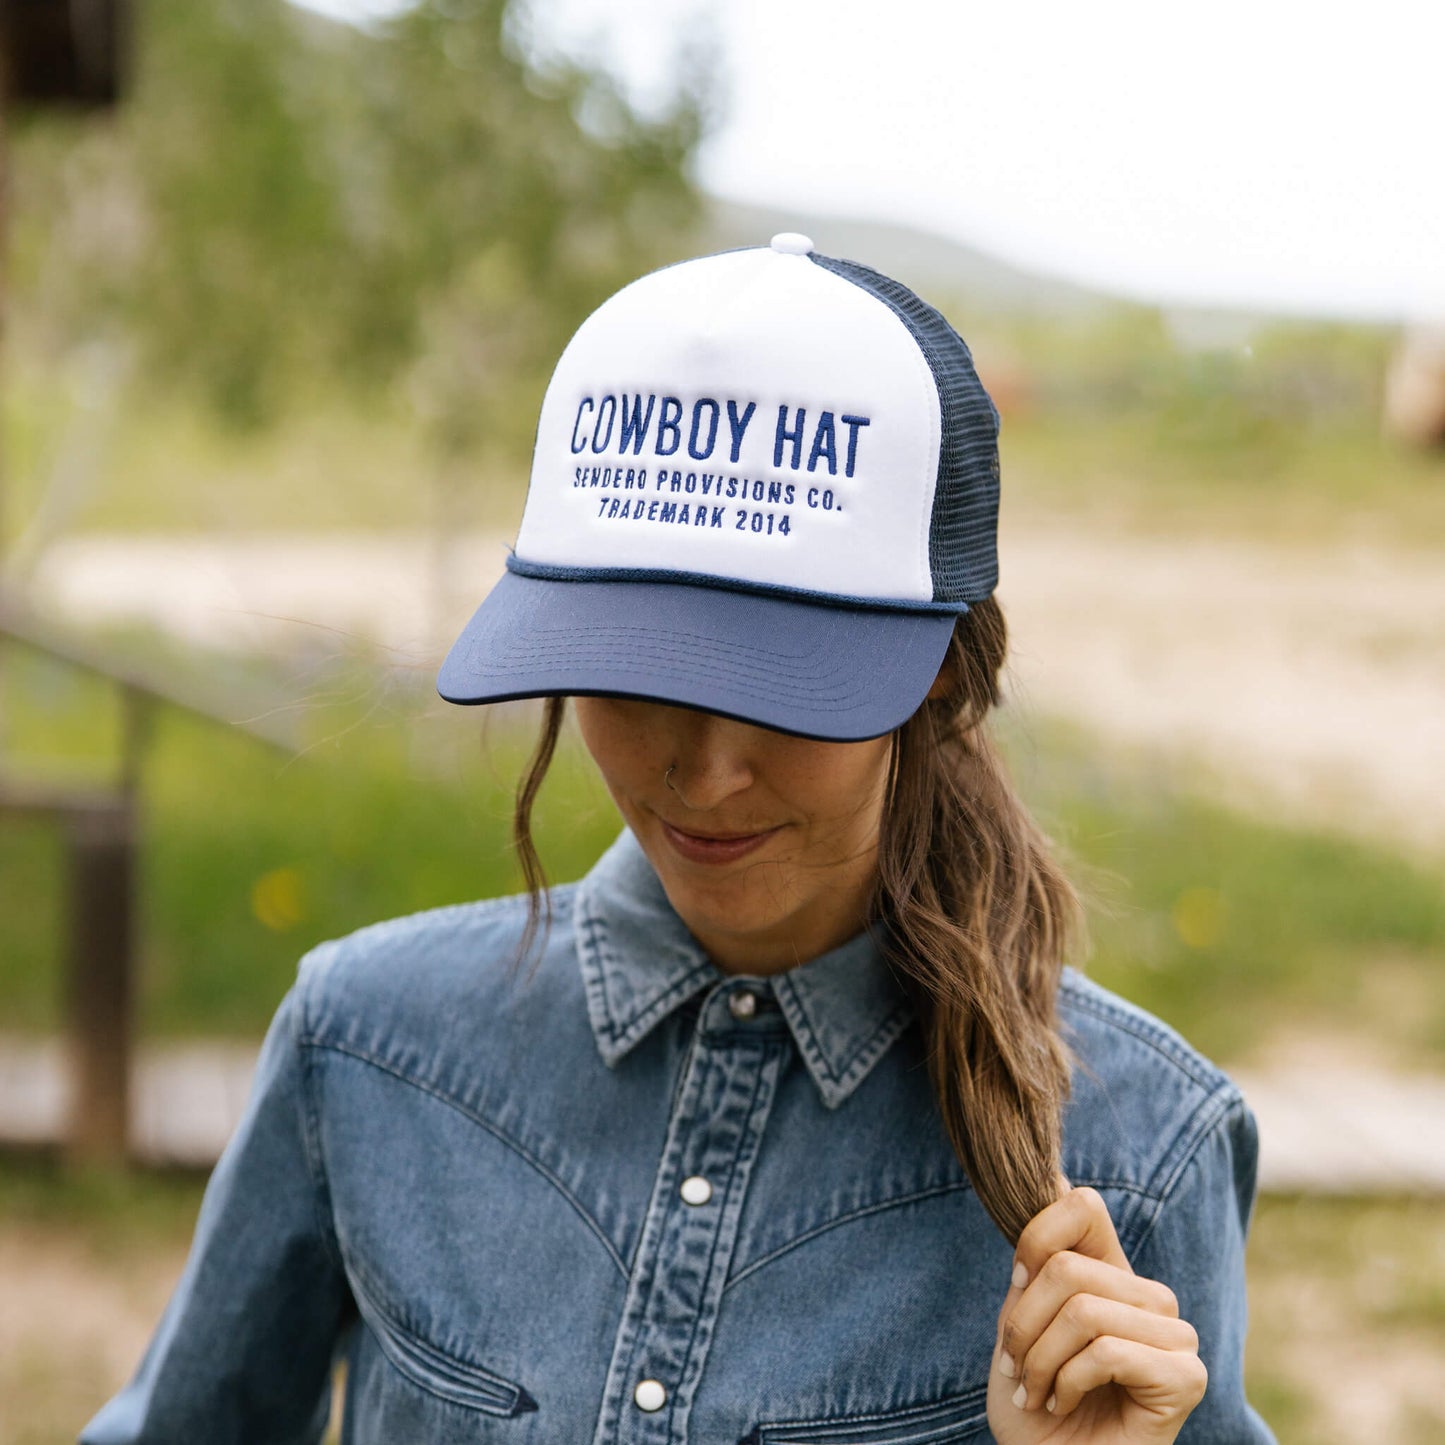 Cowboy Hat – Sendero Provisions Co